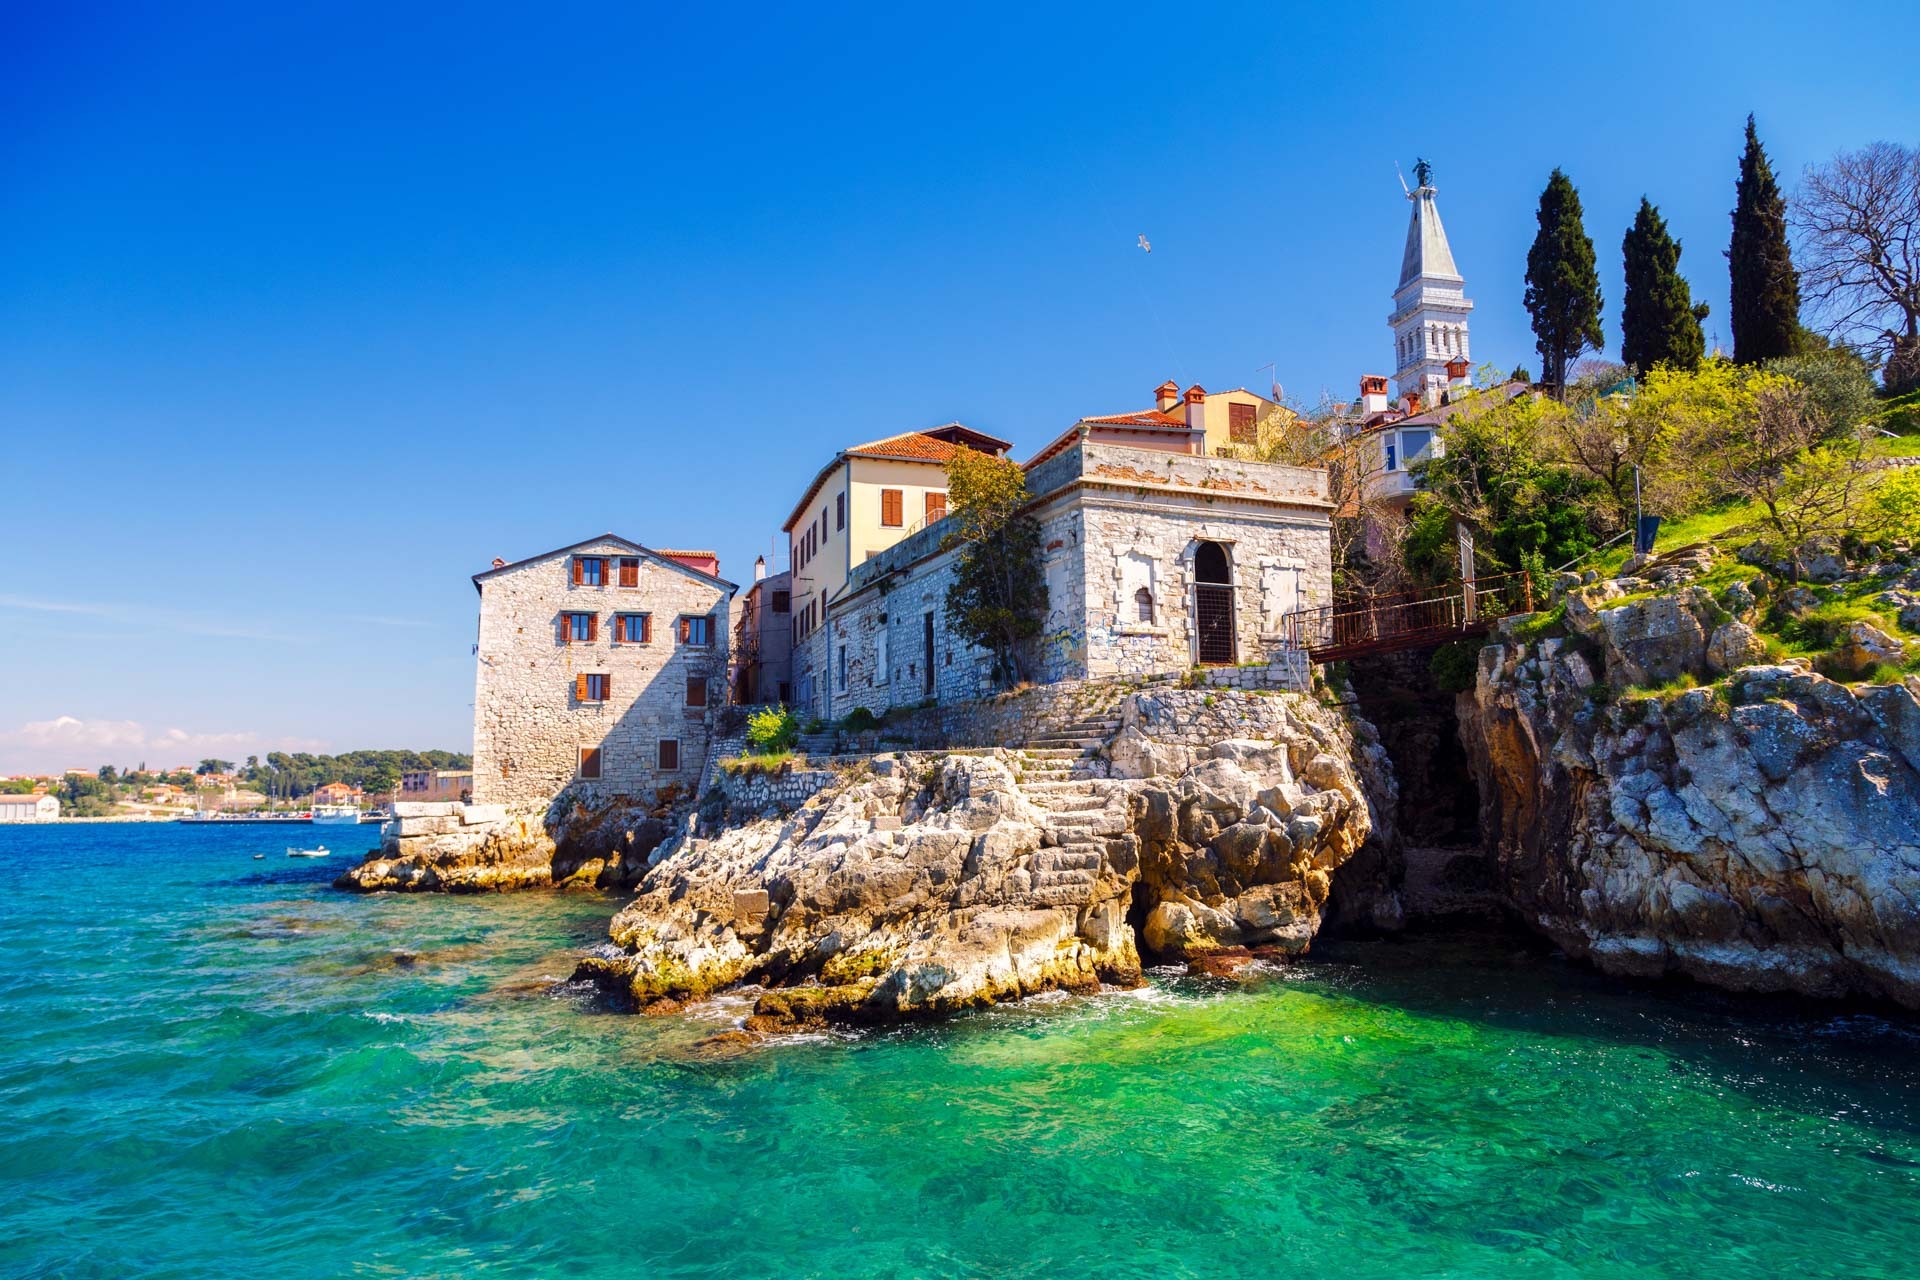 Rovinj - Adriatic Sea | Croatia Cruise